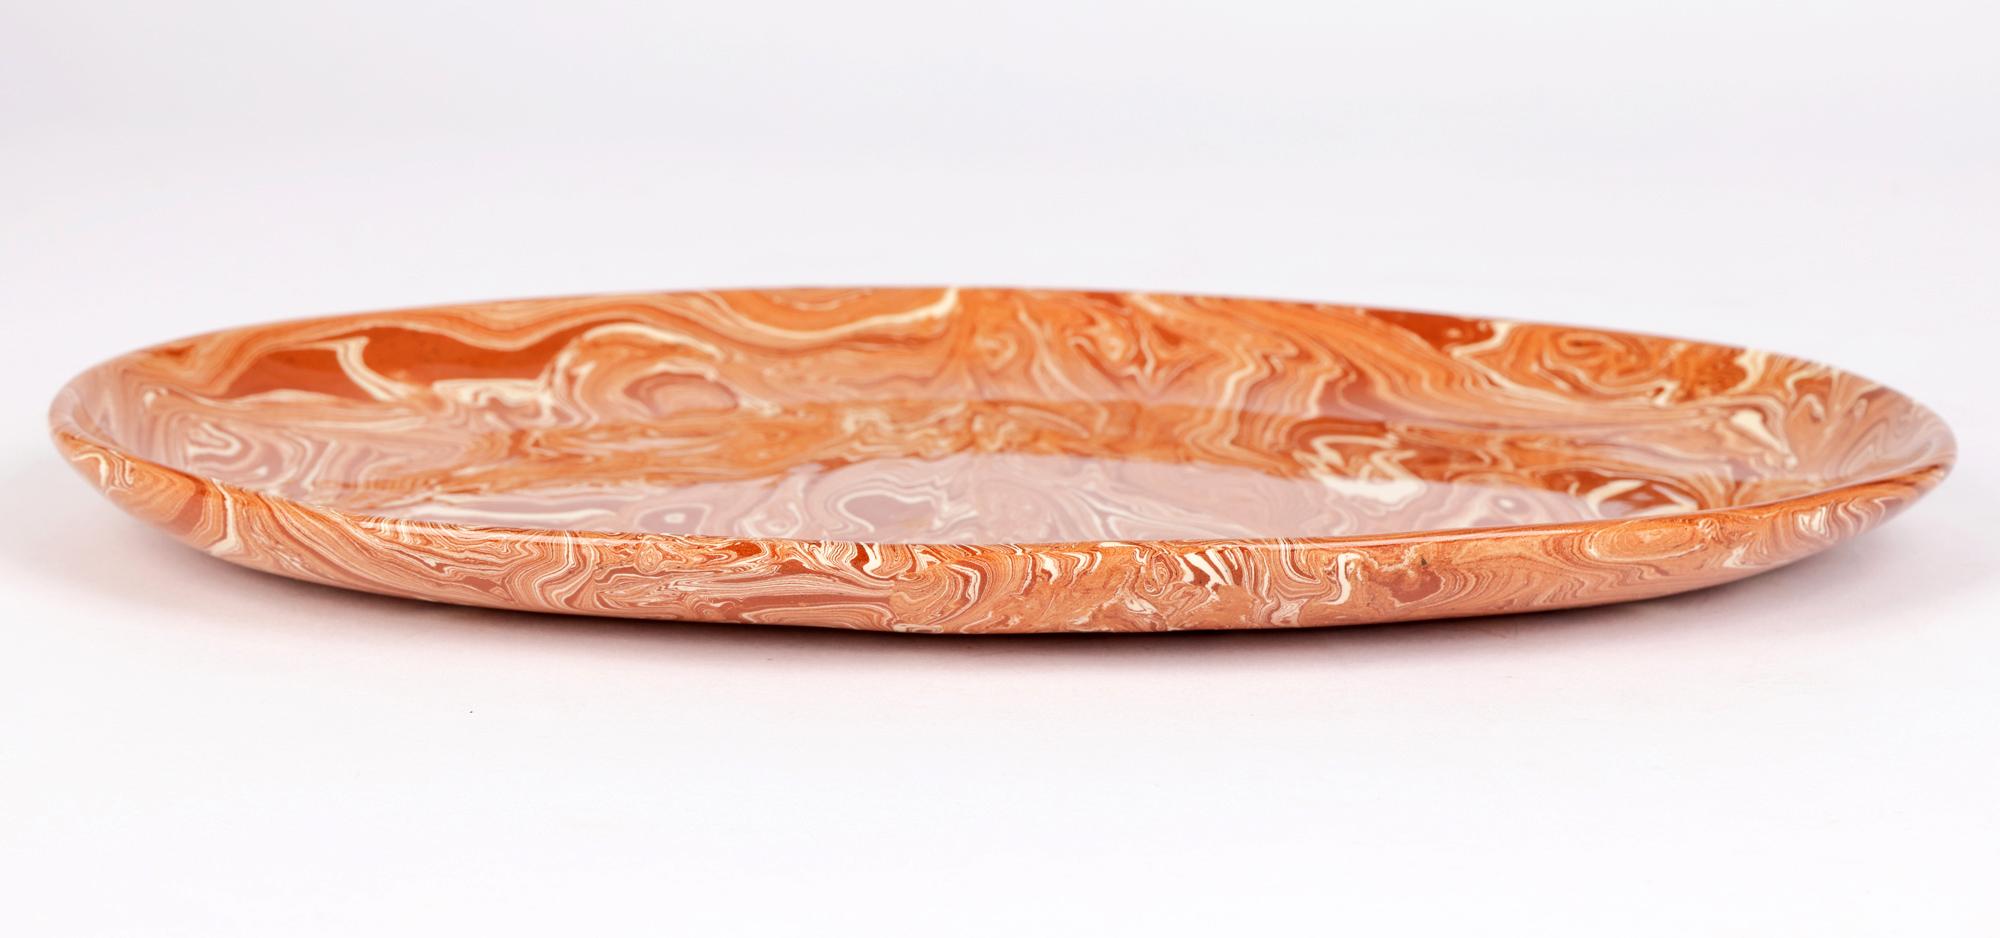 Unusual Marble Patterned Slip Glazed Terracotta Serving Dish 8